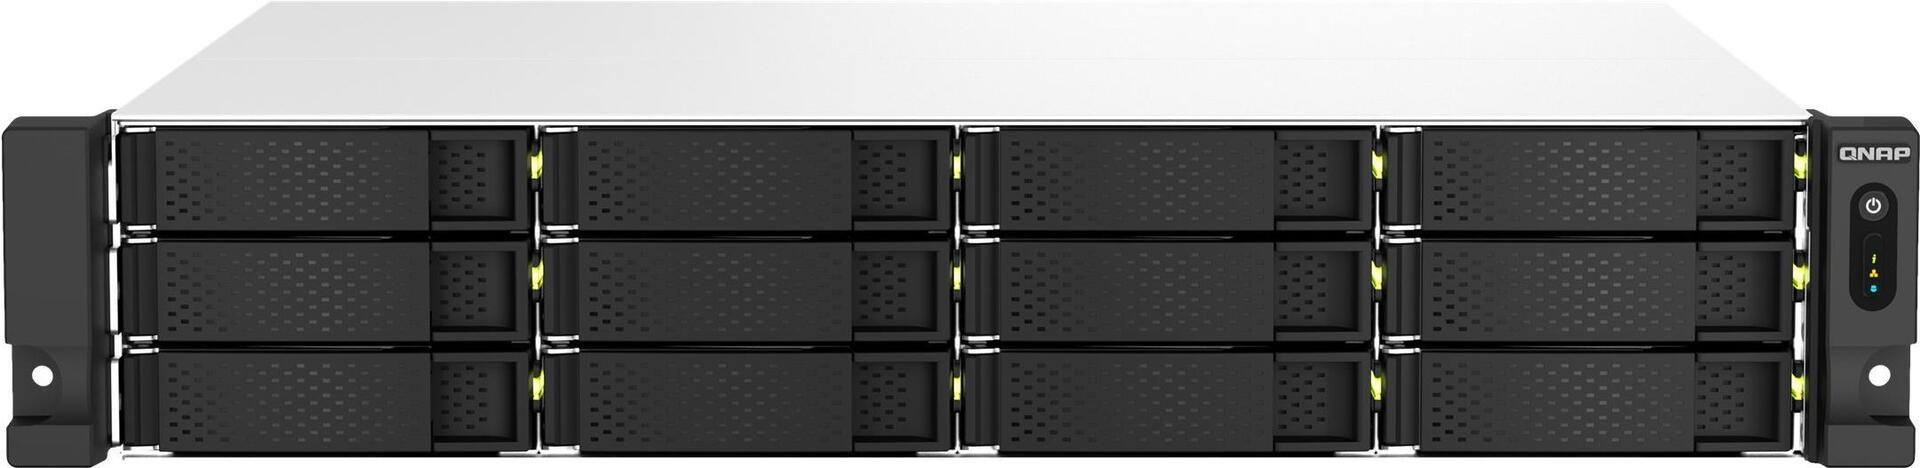 QNAP TS-1264U-RP NAS-Server (TS-1264U-RP-8G)